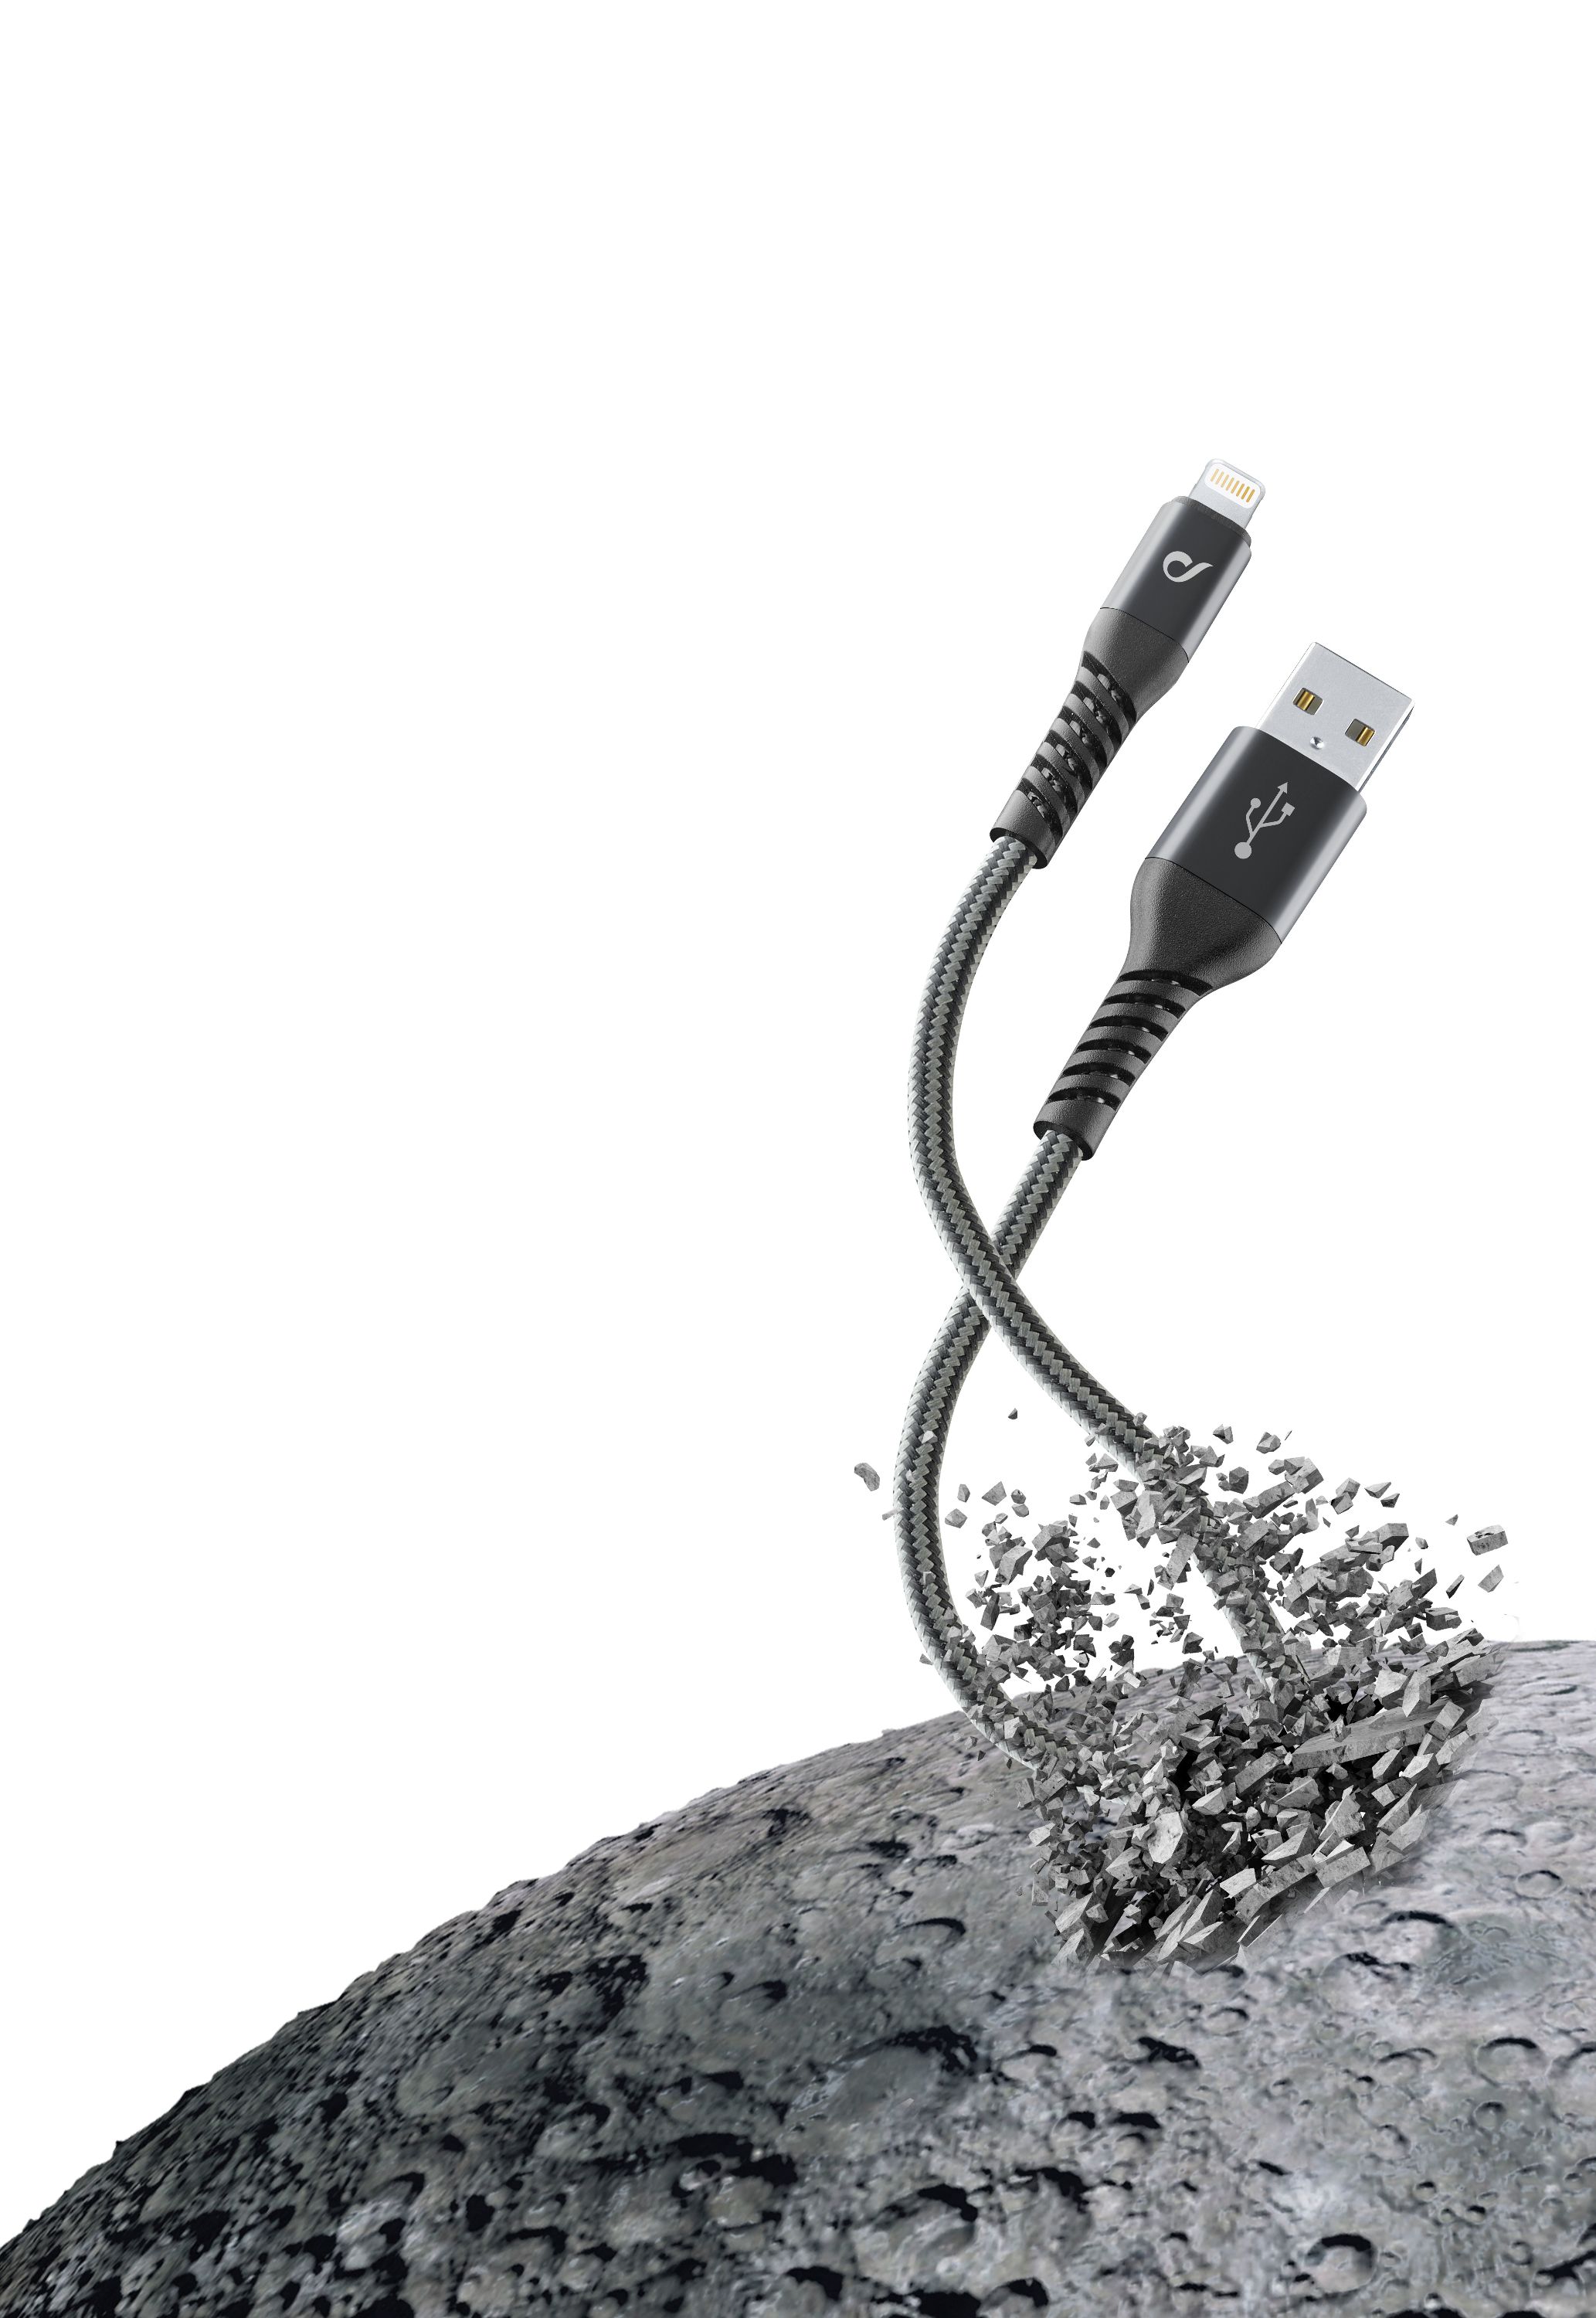 Usb cable, kevlar Apple lightning 2m, black